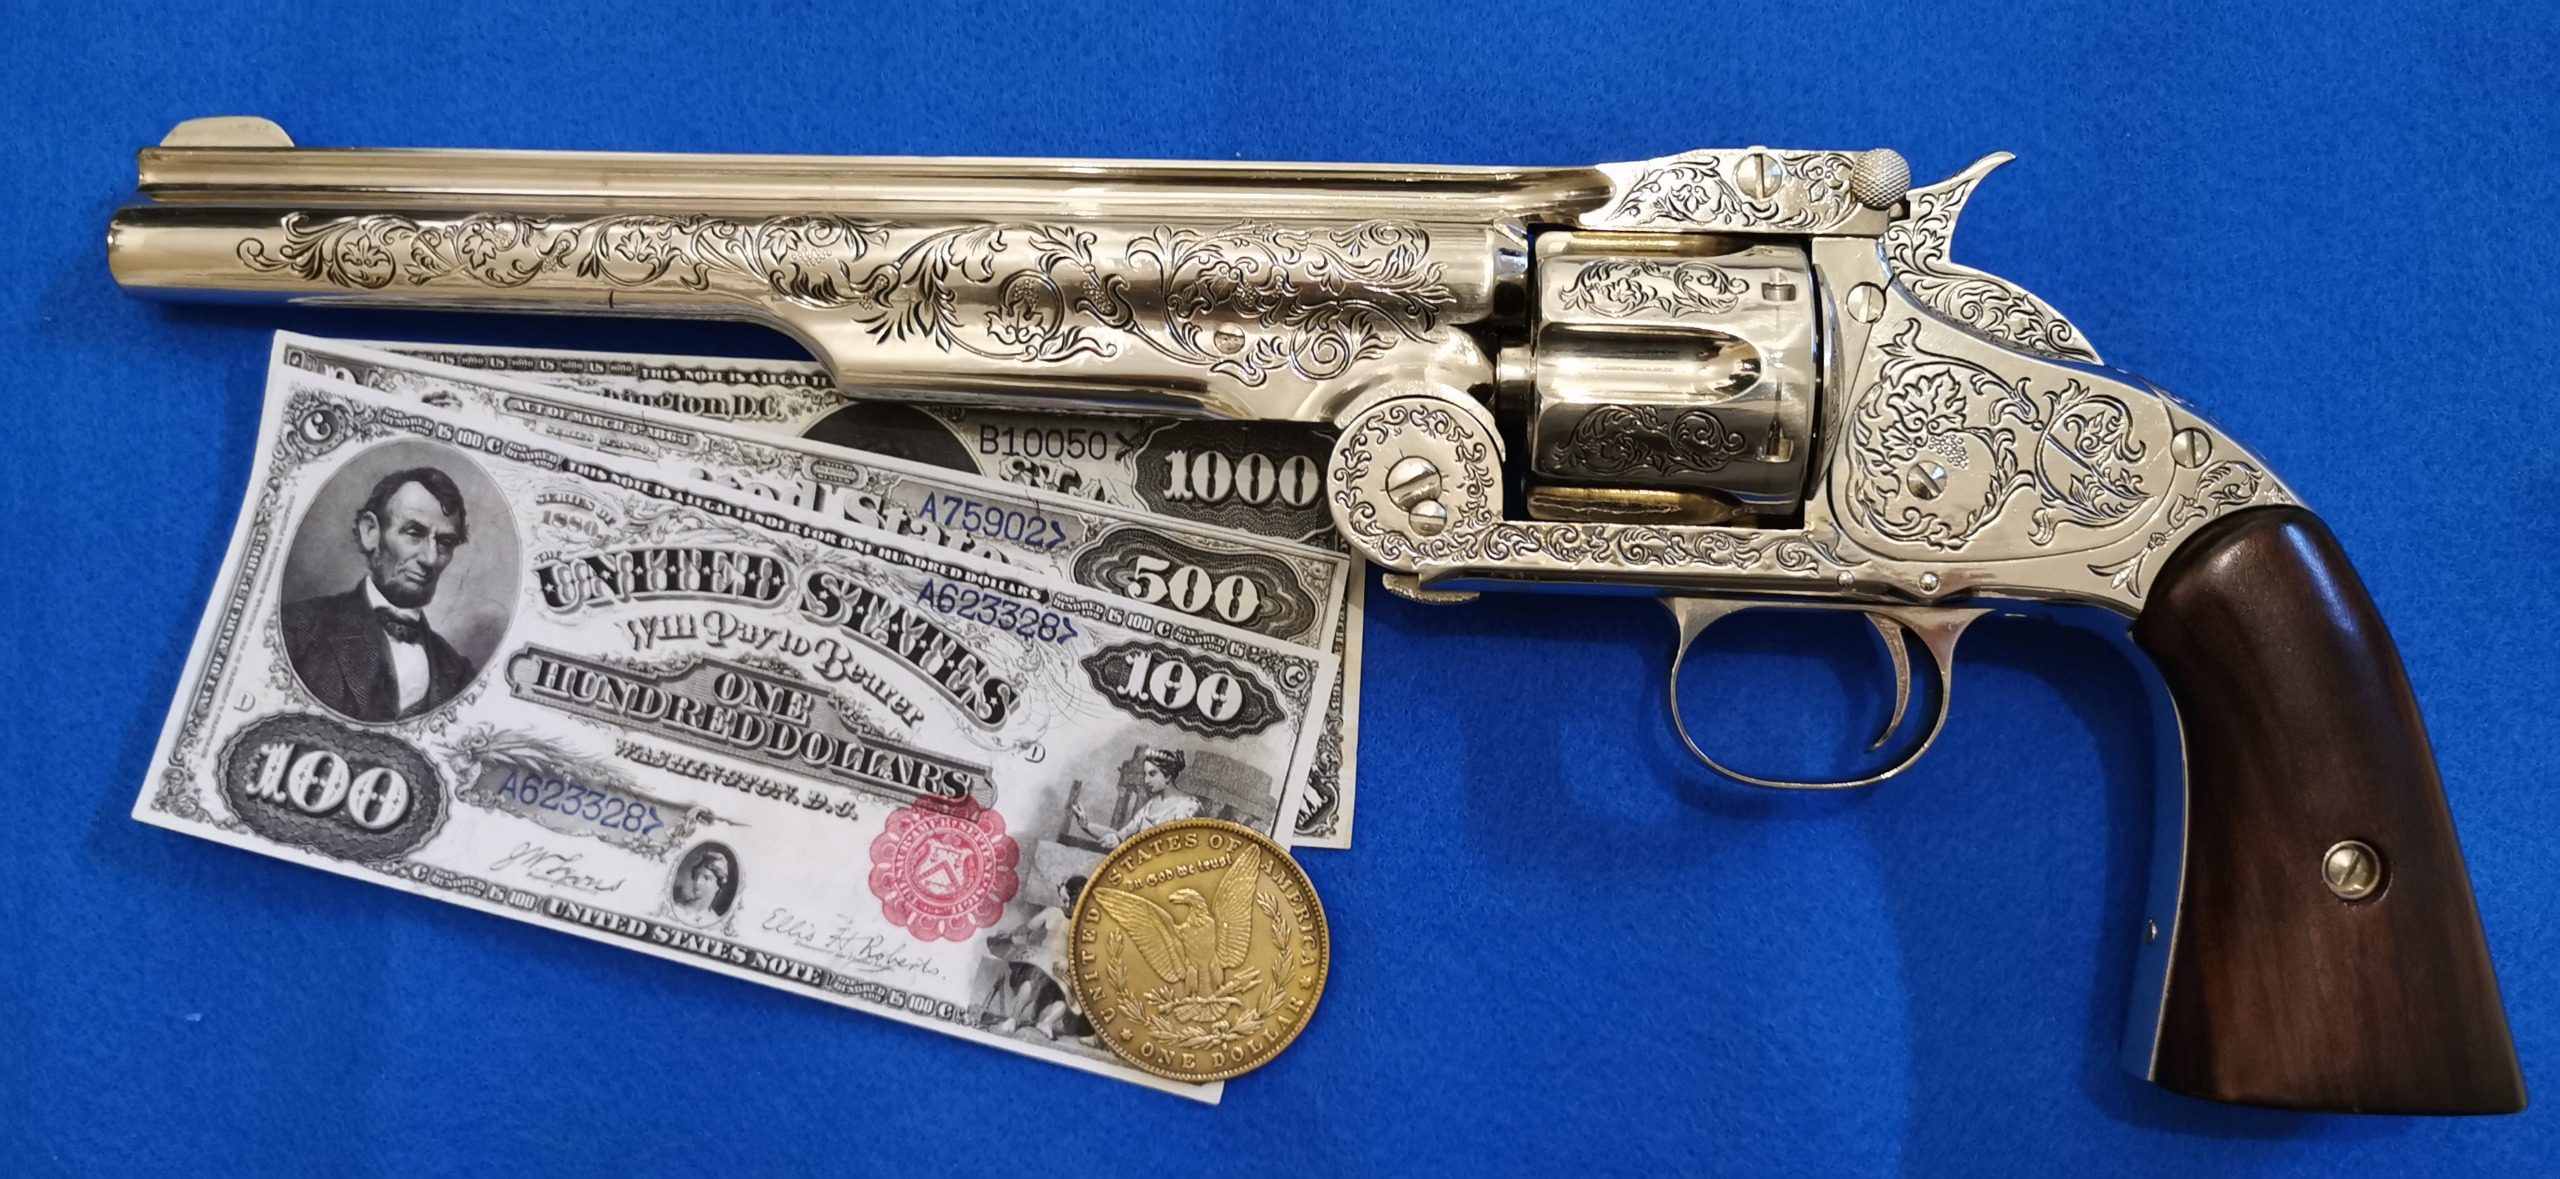 Smith & Wesson N°3 "Wyatt Earp" - Franklin Mint (MARUSHIN) Img_1475